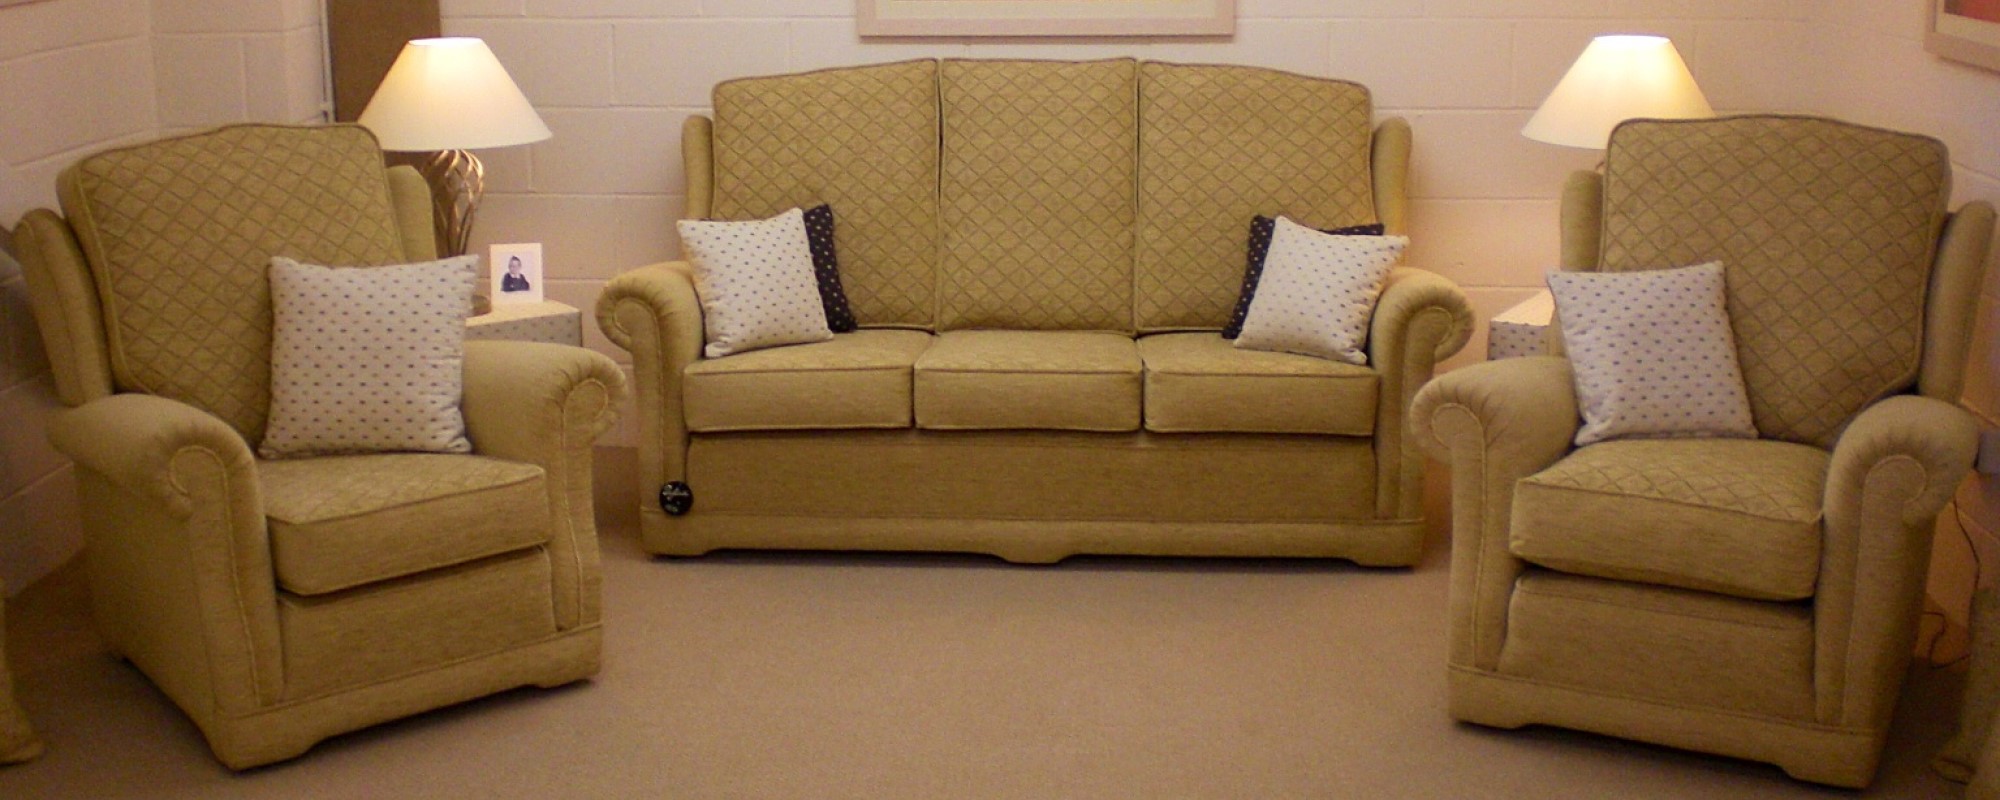 ascot sofa designs ralvern upholstery cannock